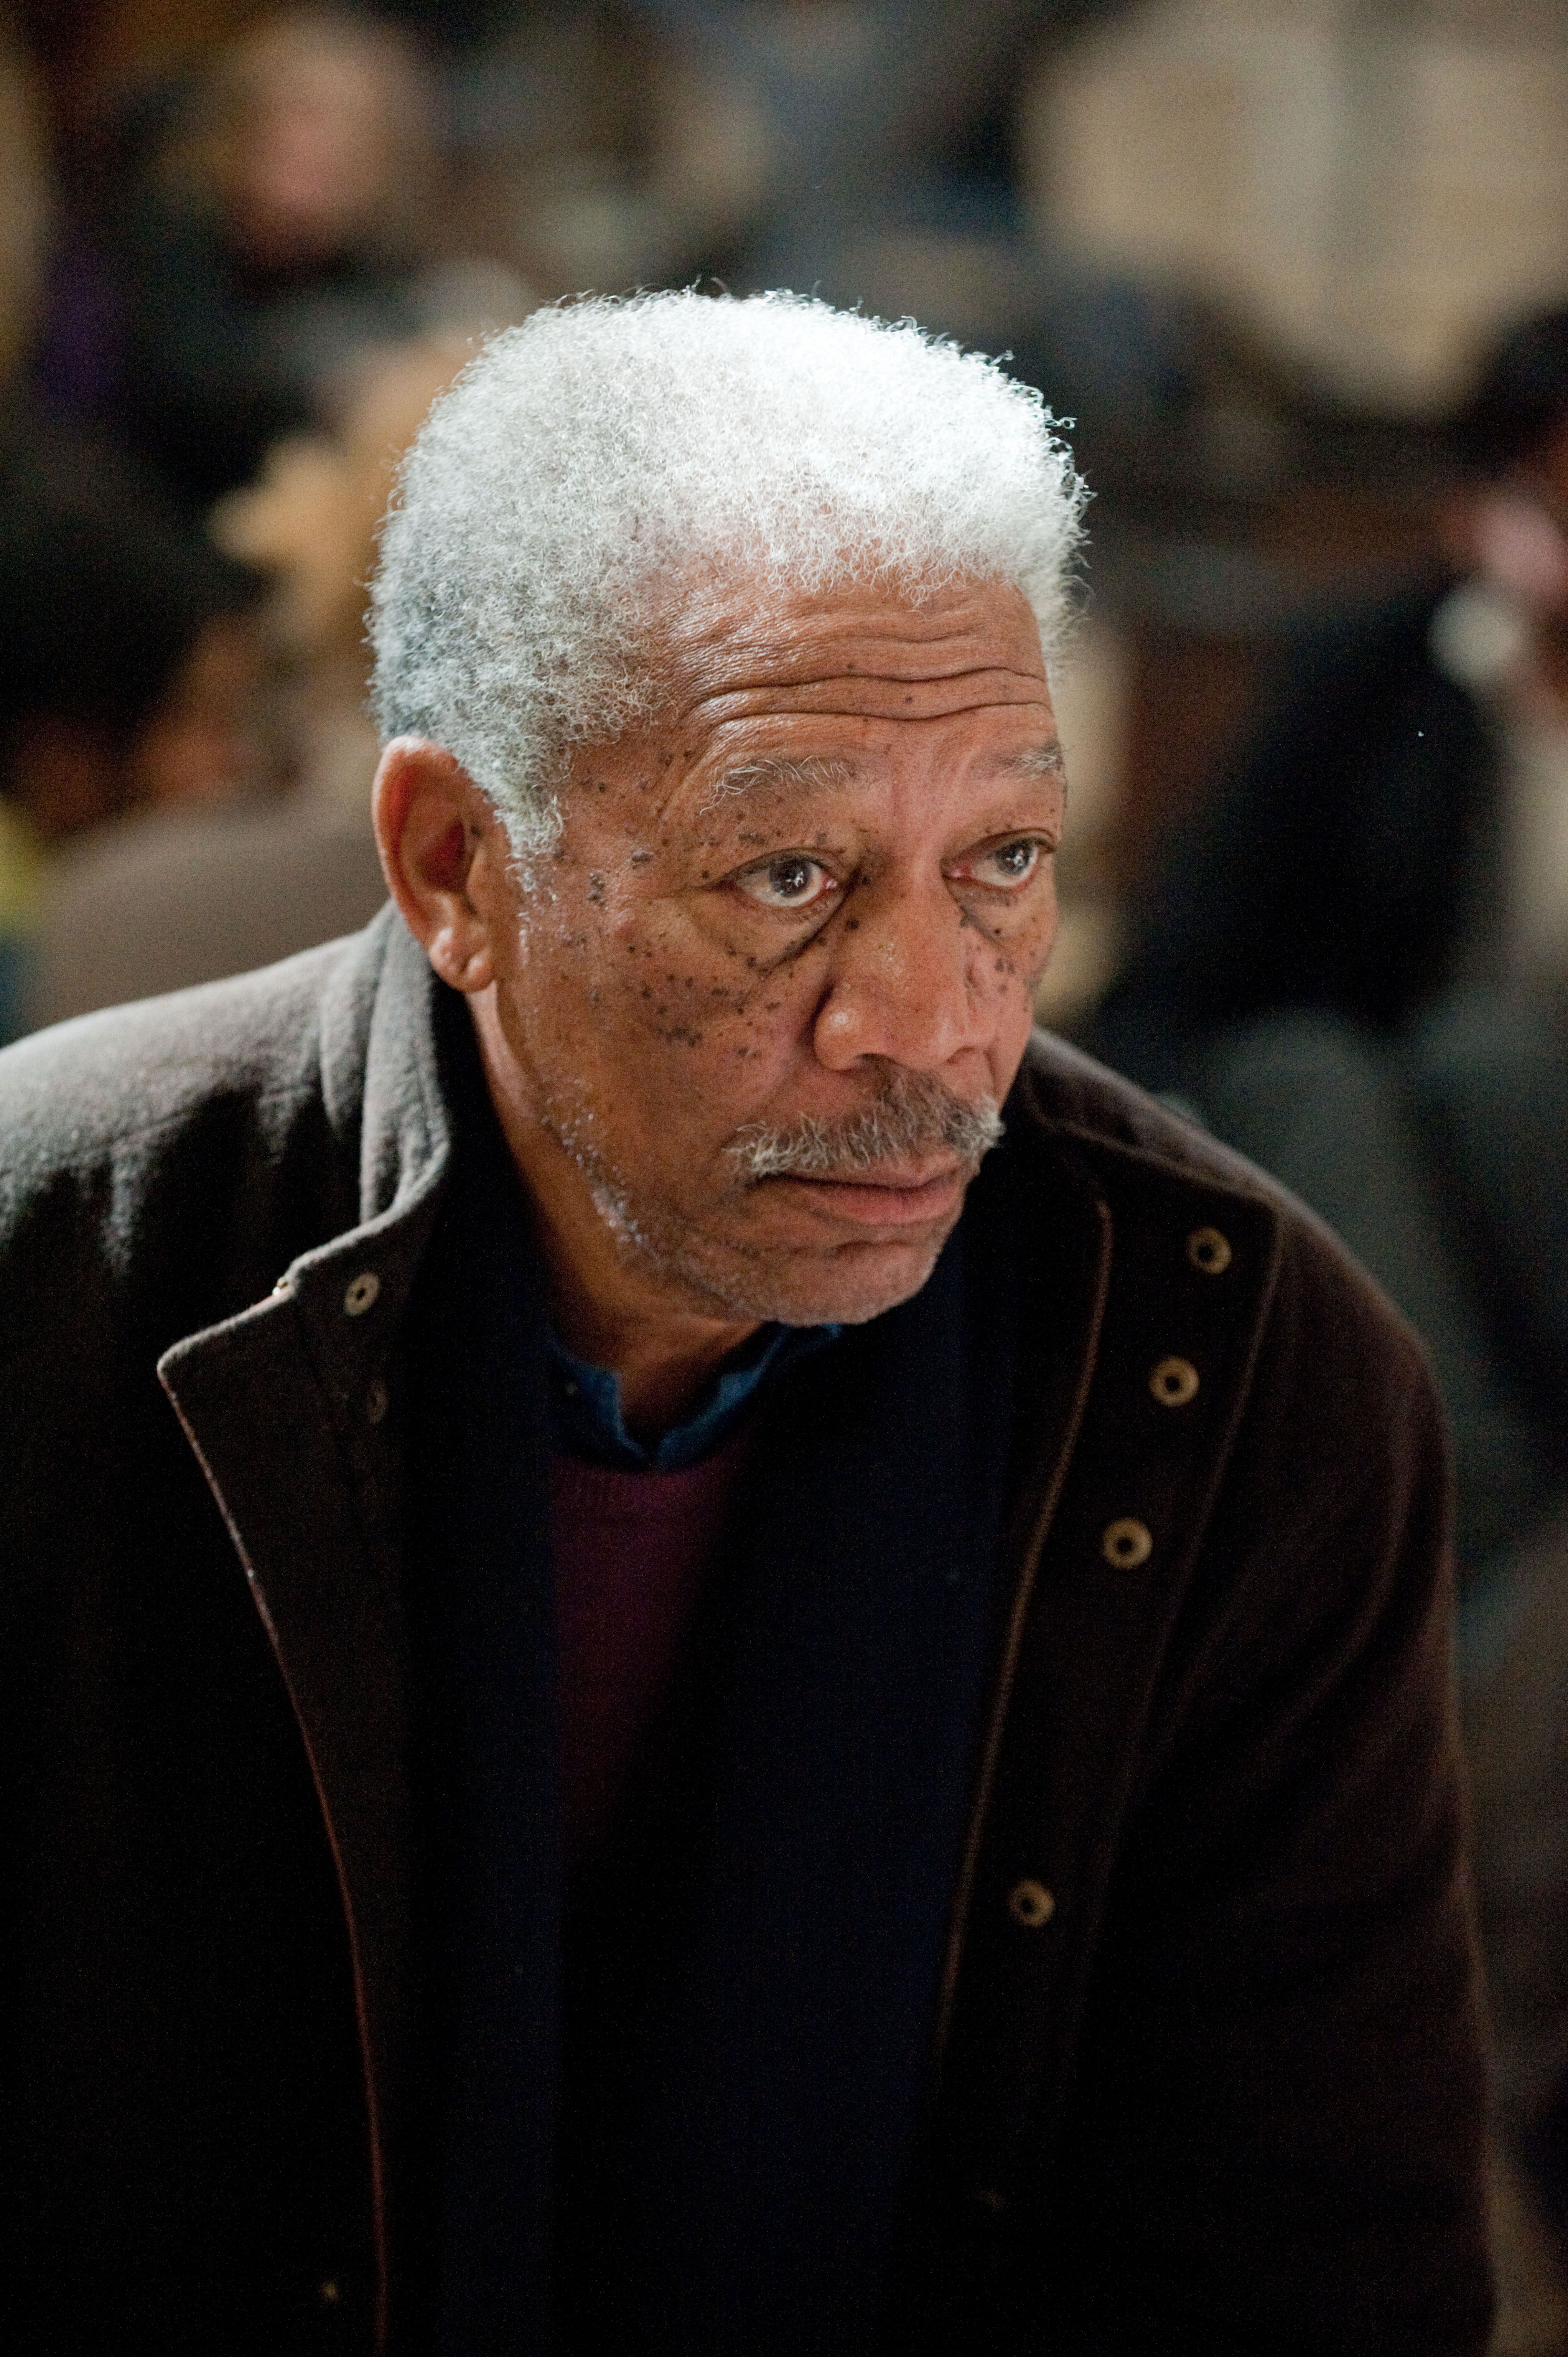 Morgan Freeman as Lucius Fox in 'The Dark Knight Rises'